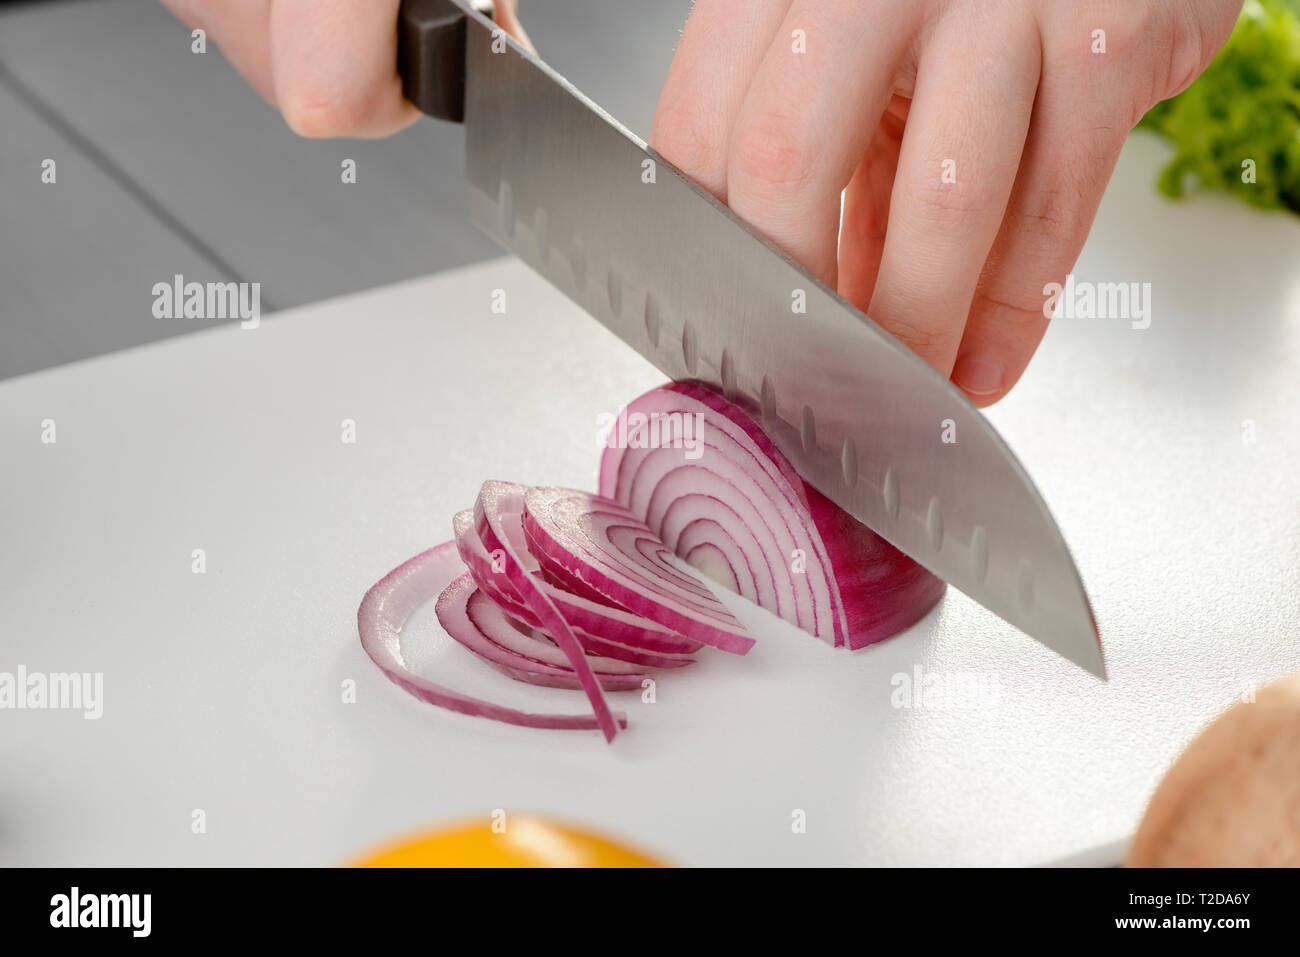 How to Chop an Onion Like a Pro Chef